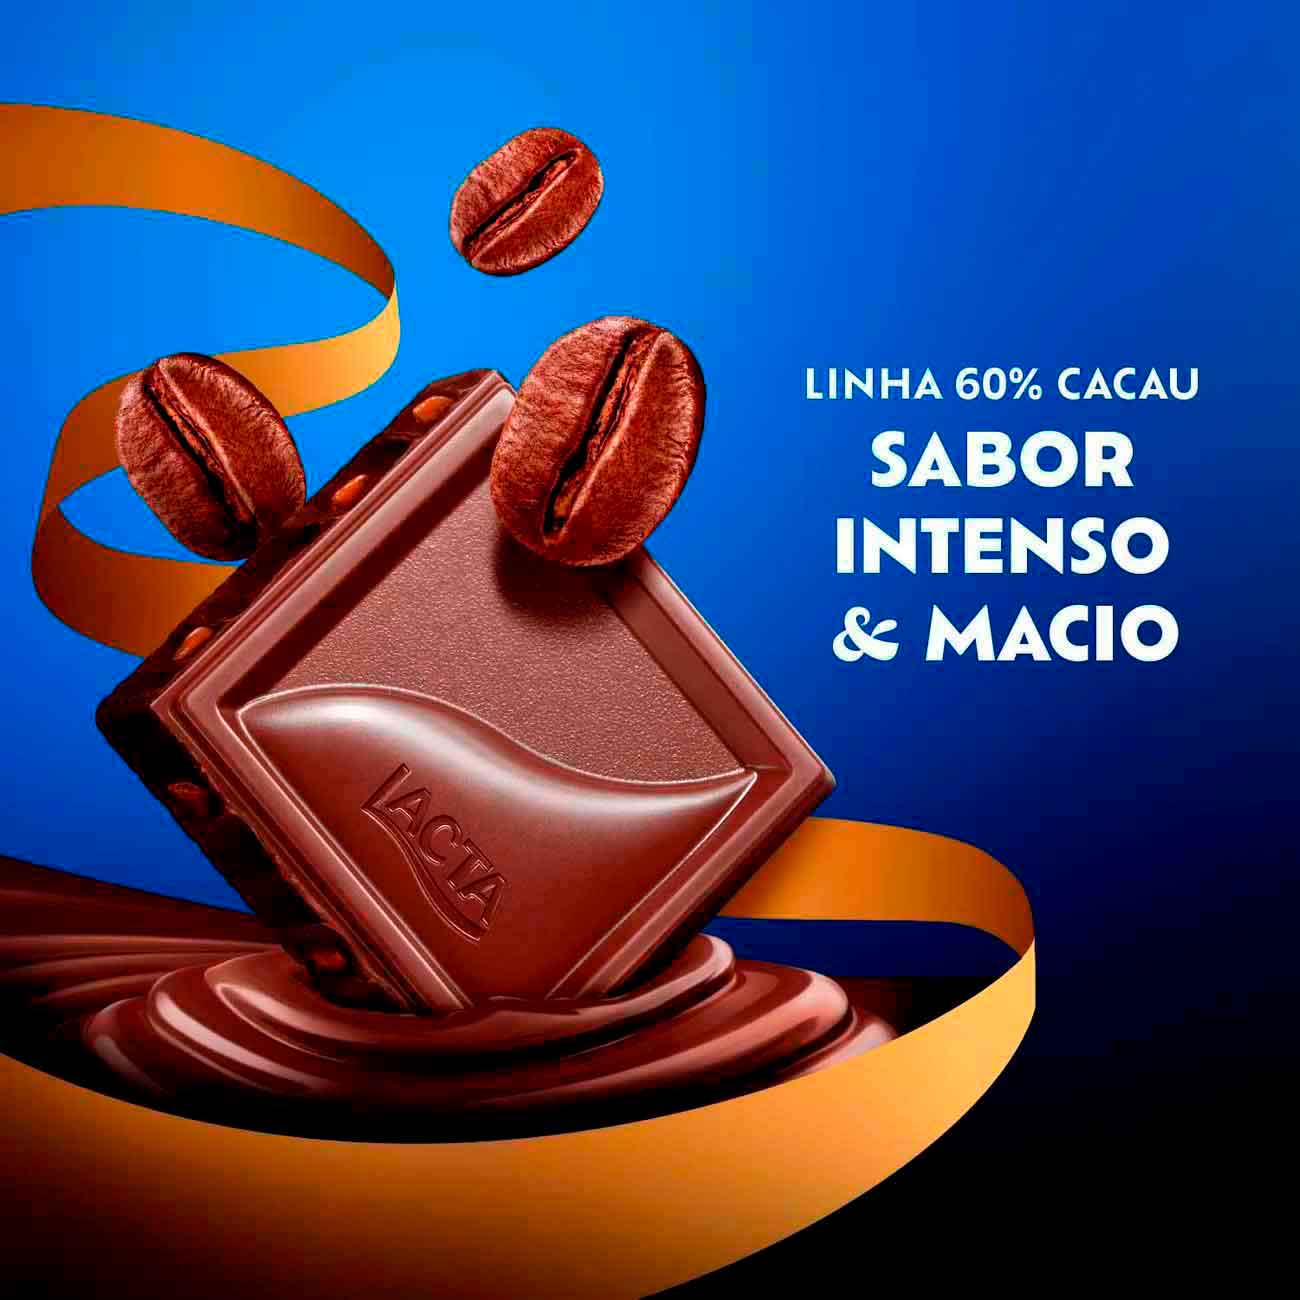 Barra de Chocolate Lacta Intense 60% Cacau Caf 85g | Display 17 unidades